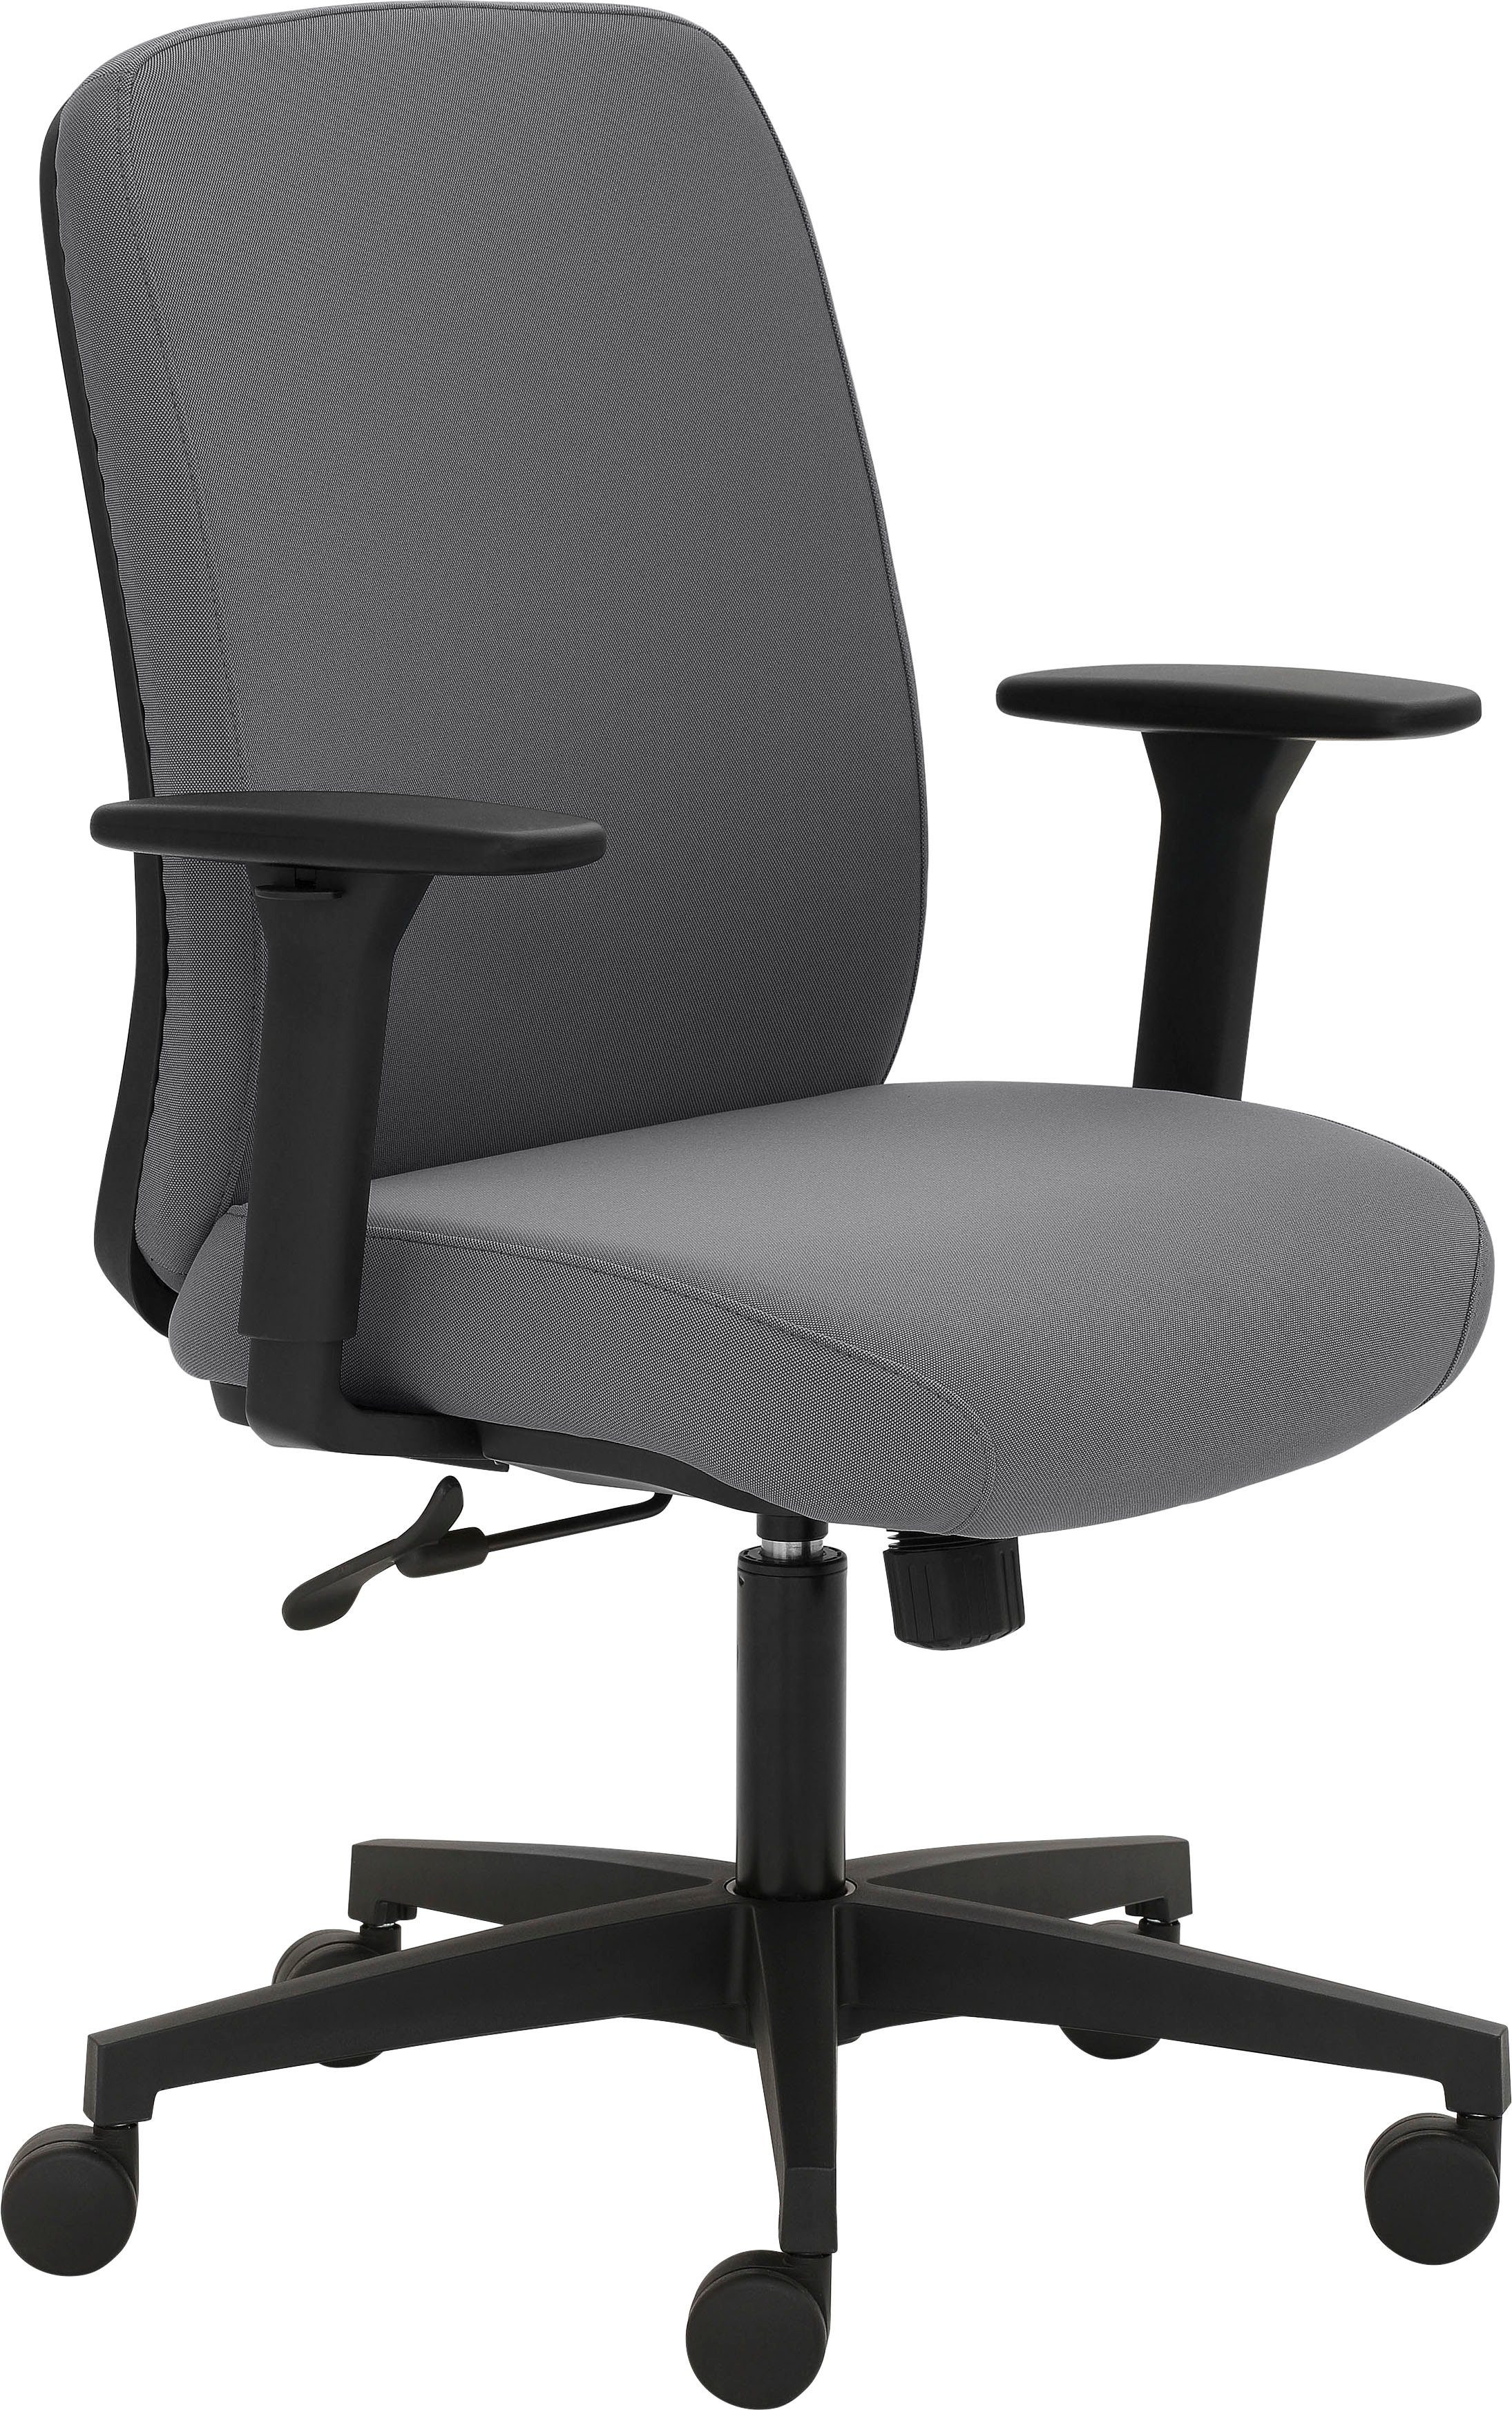 Grau Grau 2219, GS-zertifiziert, Polsterung | für starke Sitzmöbel Sitzkomfort Mayer extra maximalen Drehstuhl